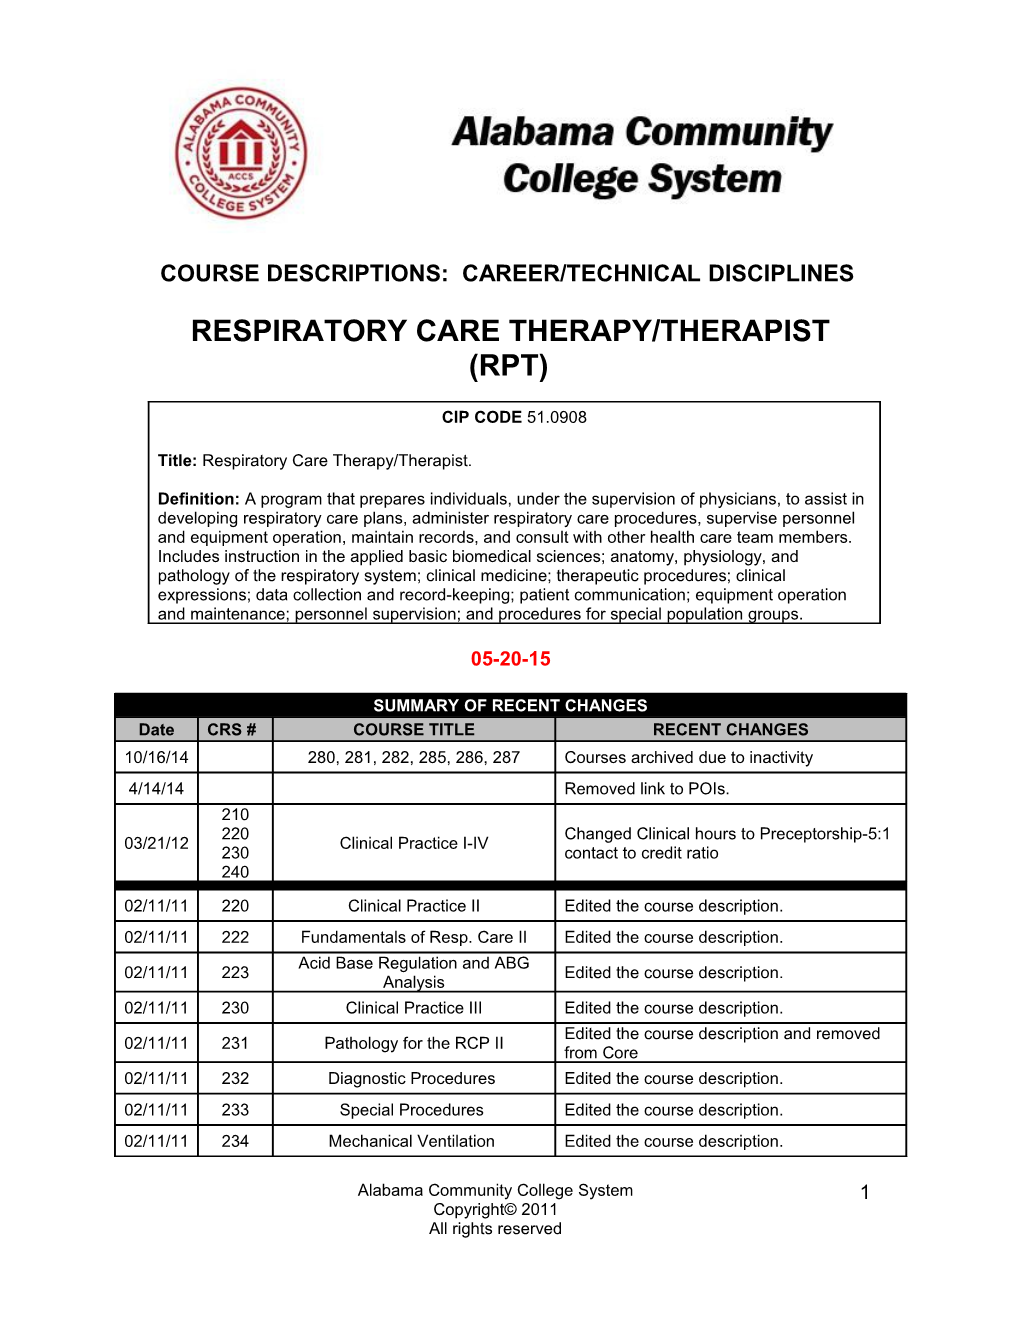 Respiratory Care Therapy/Therapist